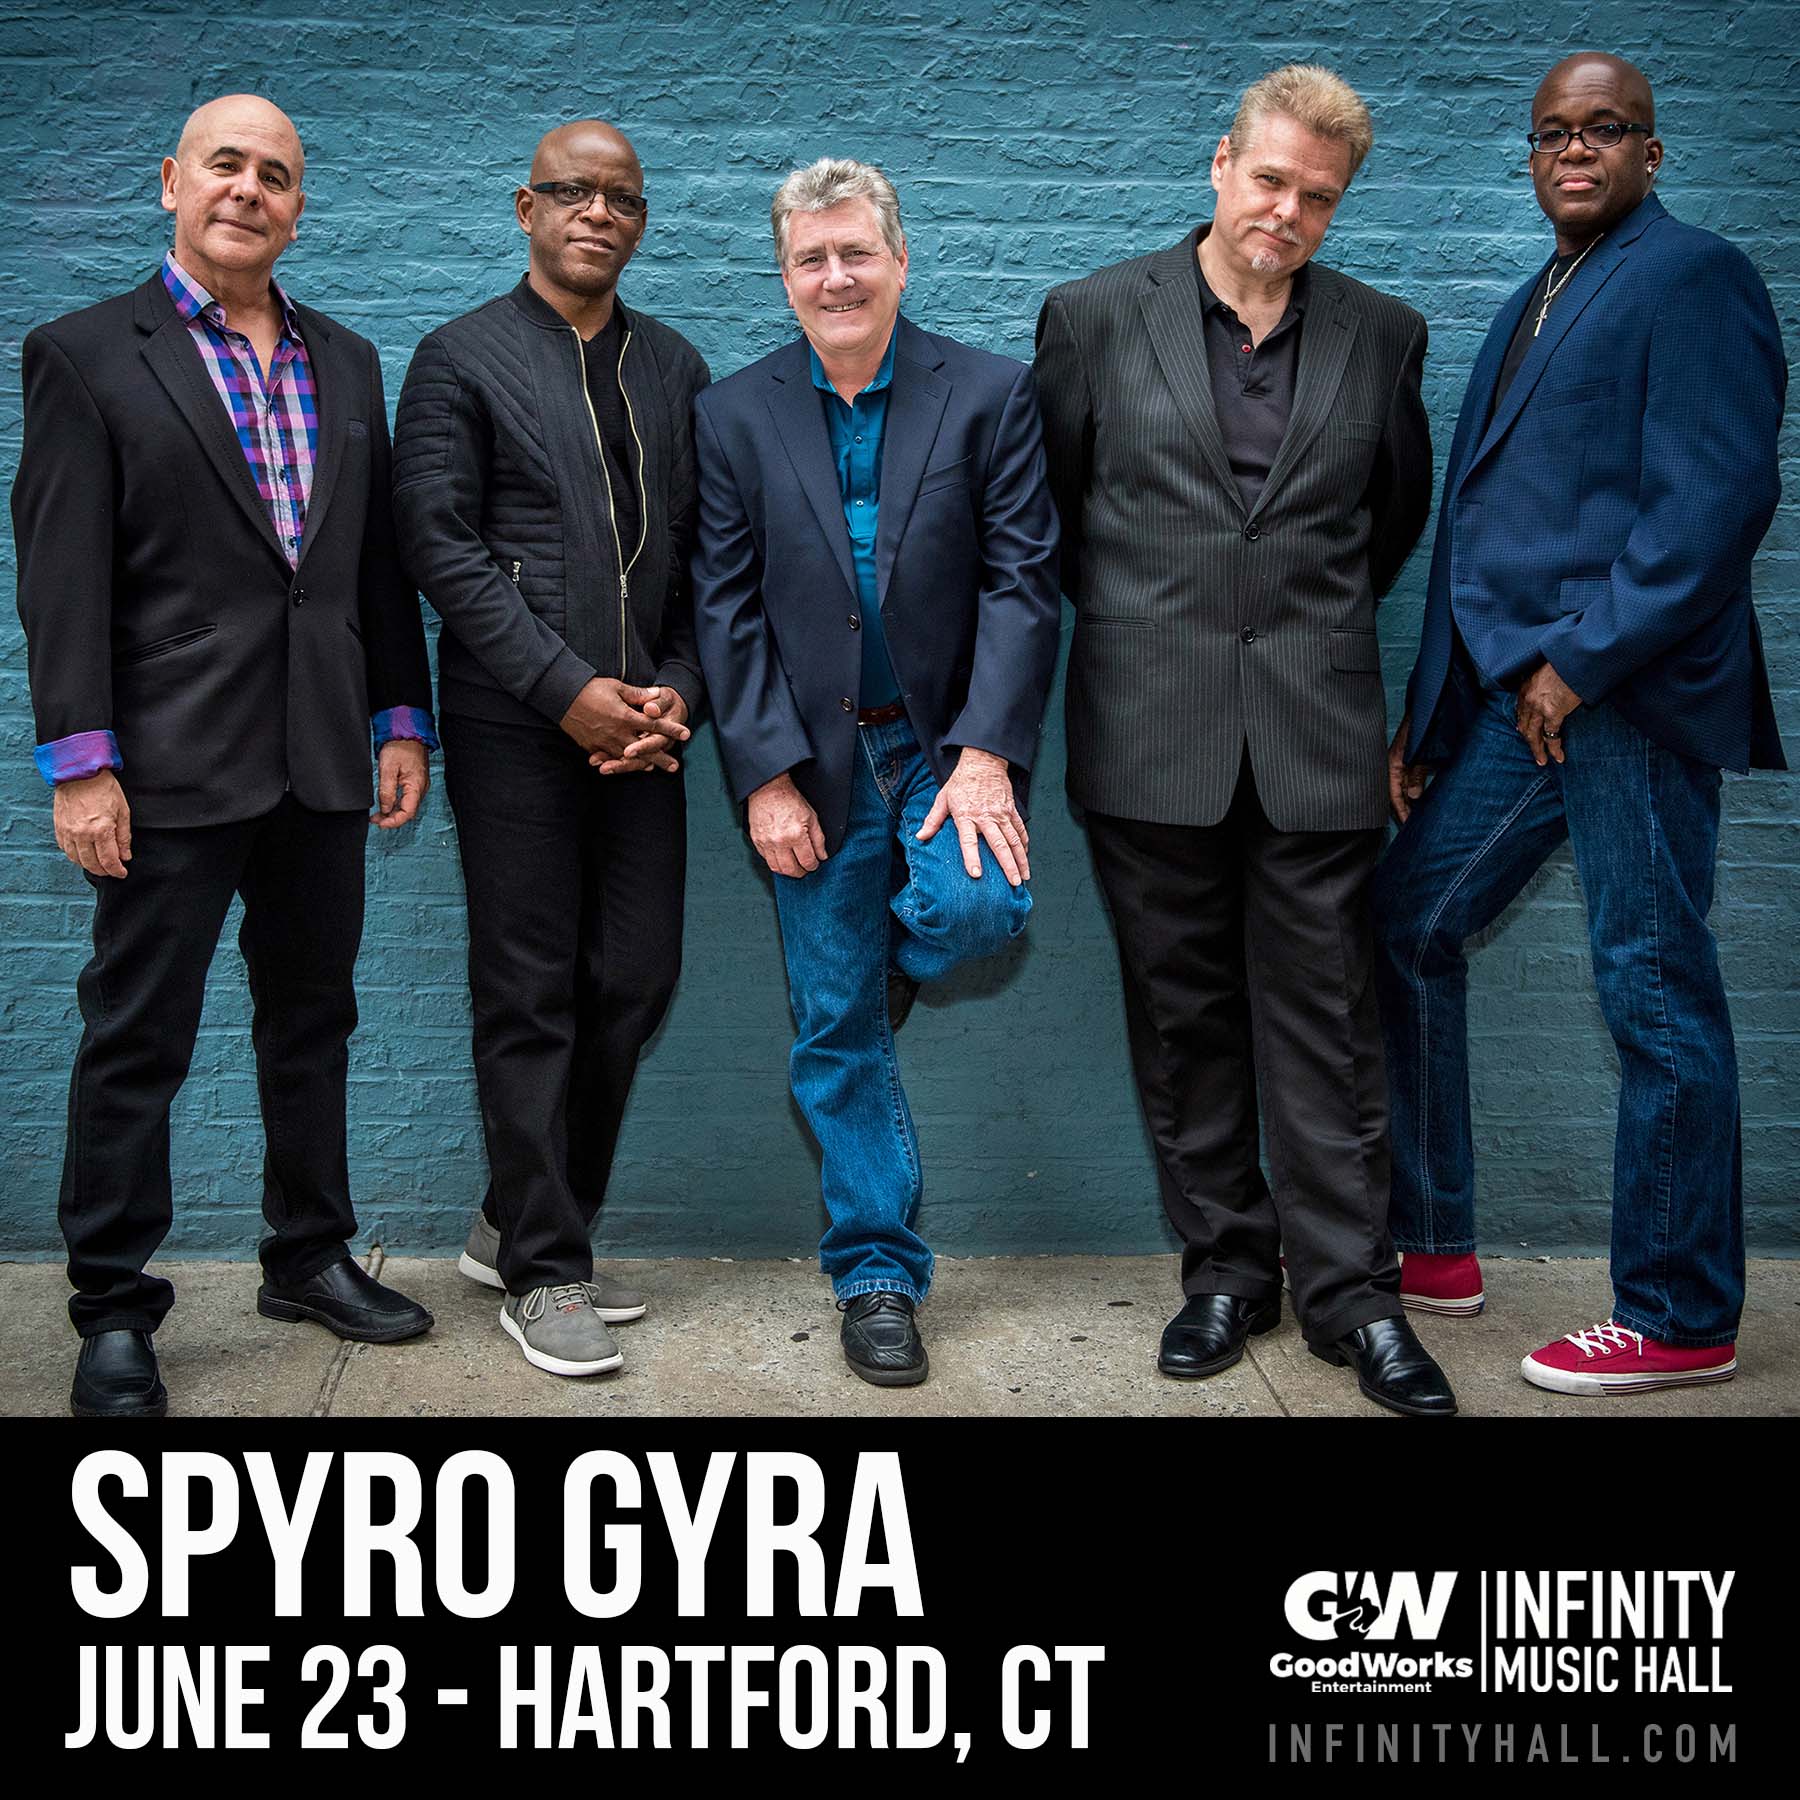 Buy Tickets to Spyro Gyra in Hartford on Jun 23, 2023